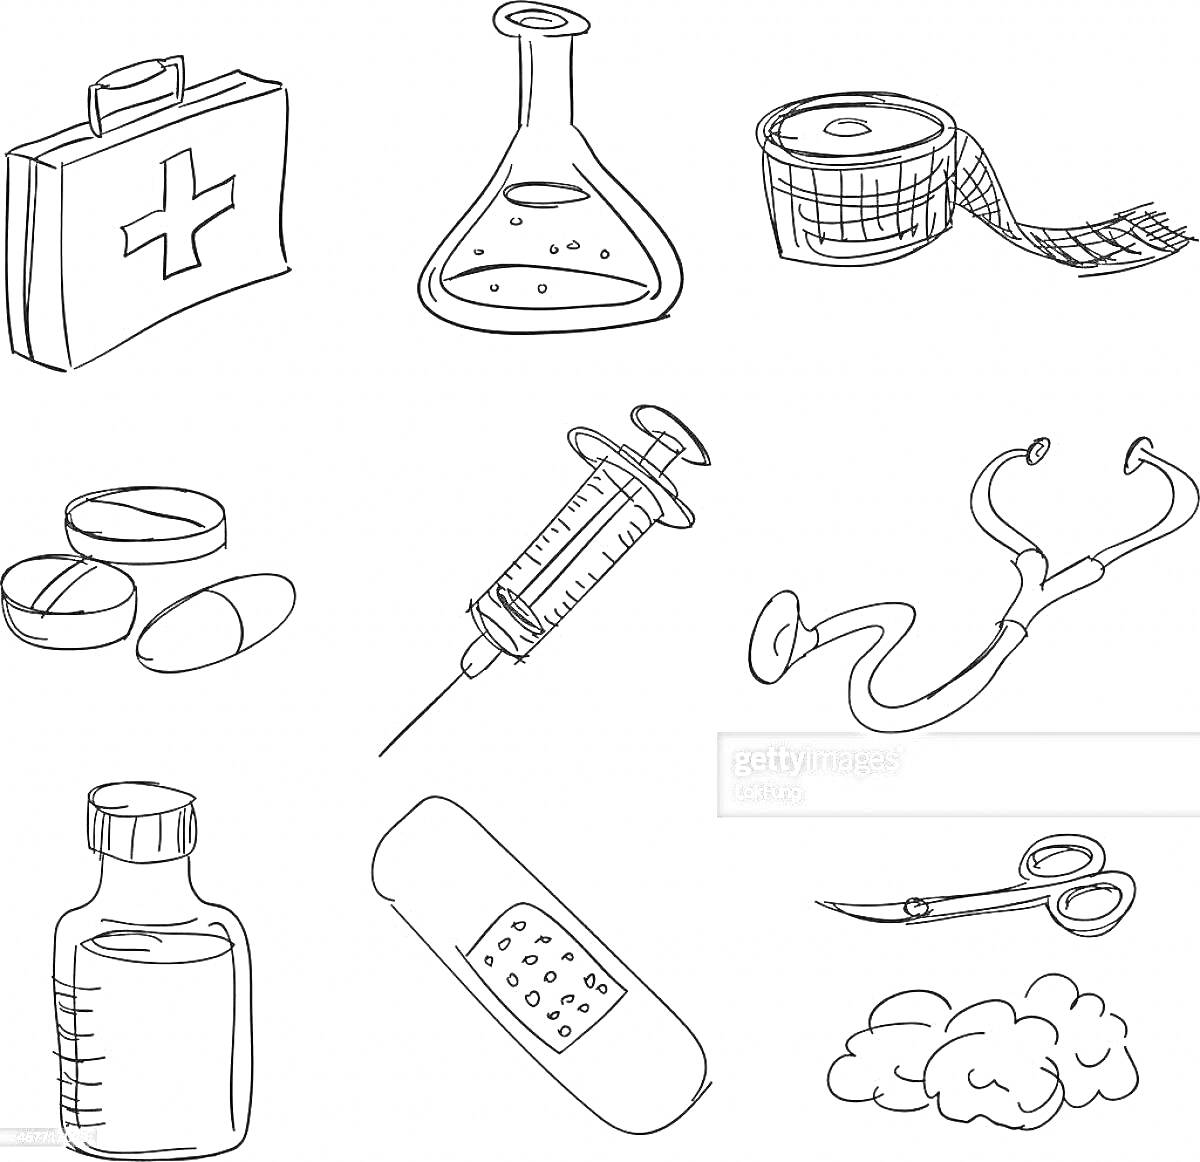 На раскраске изображено: Медицина, Аптечка, Колба, Таблетки, Шприц, Стетоскоп, Лекарство, Пластырь, Ножницы, Вата, Медицинские инструменты